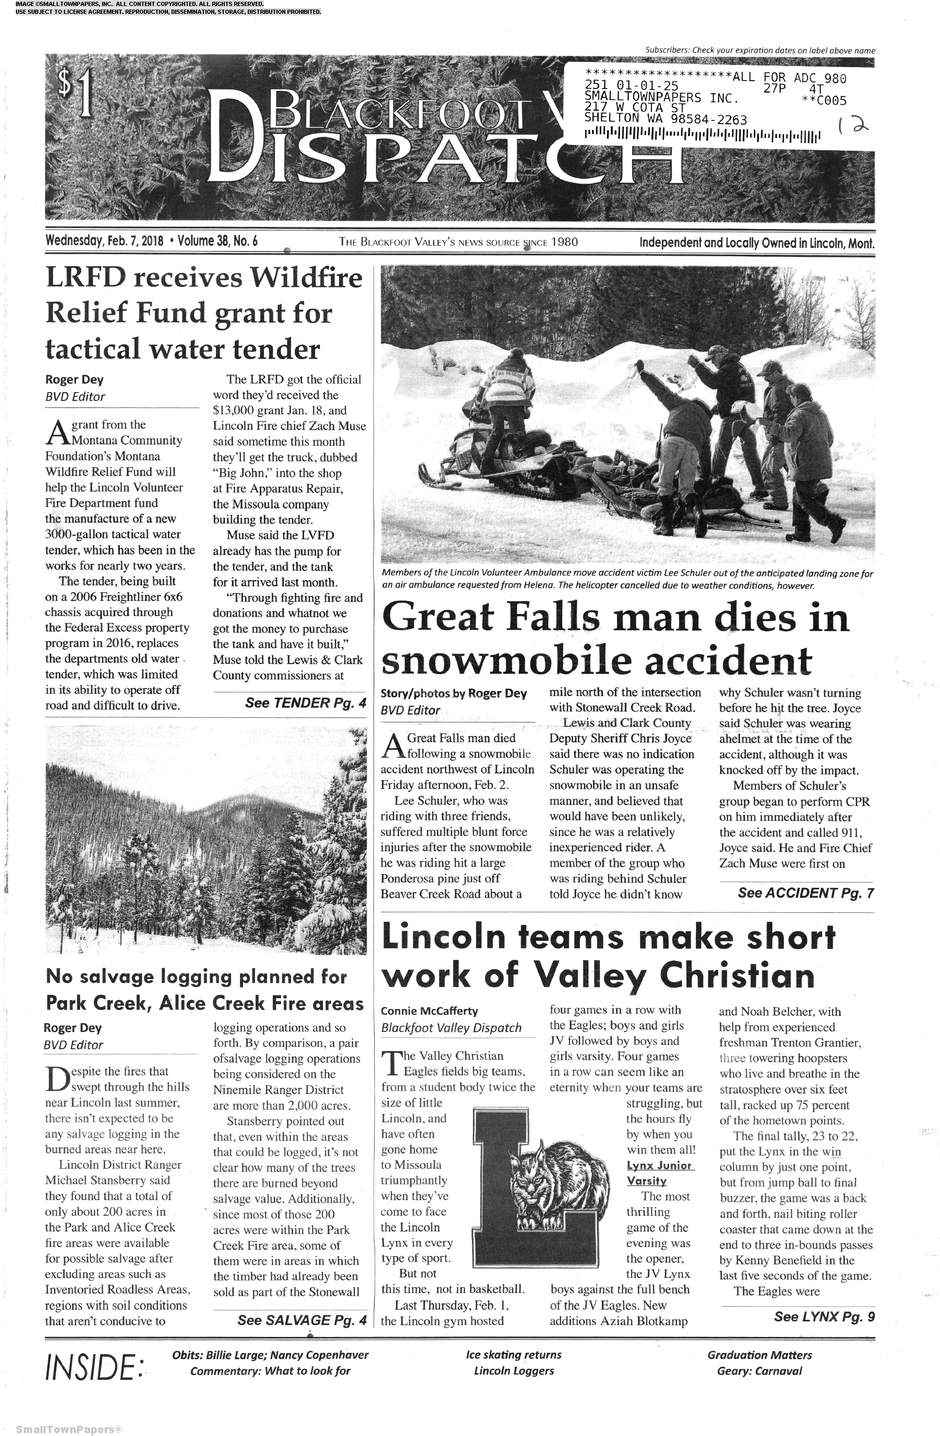 Blackfoot Valley Dispatch